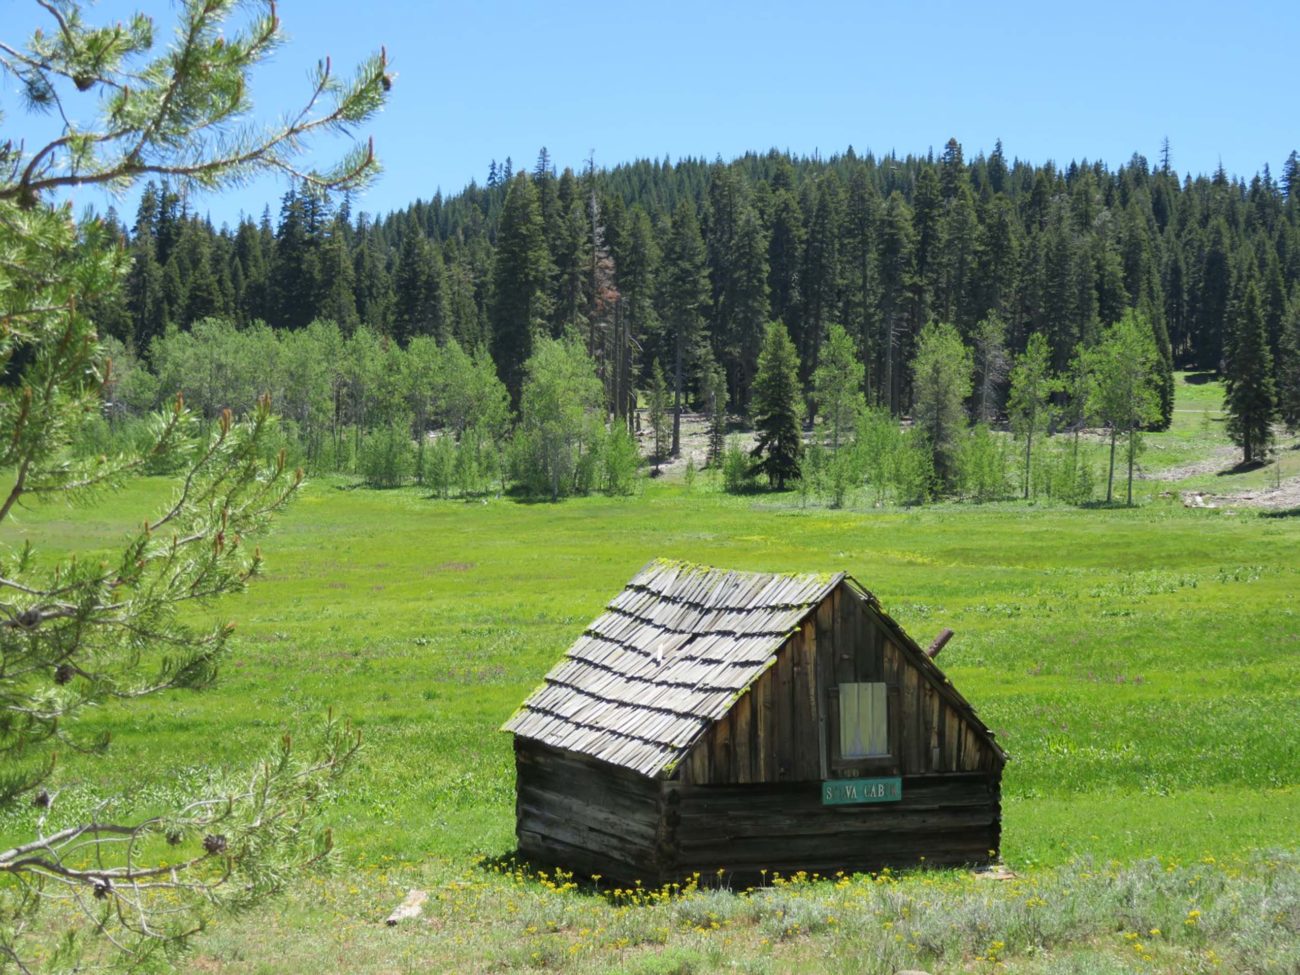 Silva cabin and meadow near Martin's Dairy. J. Thesken.